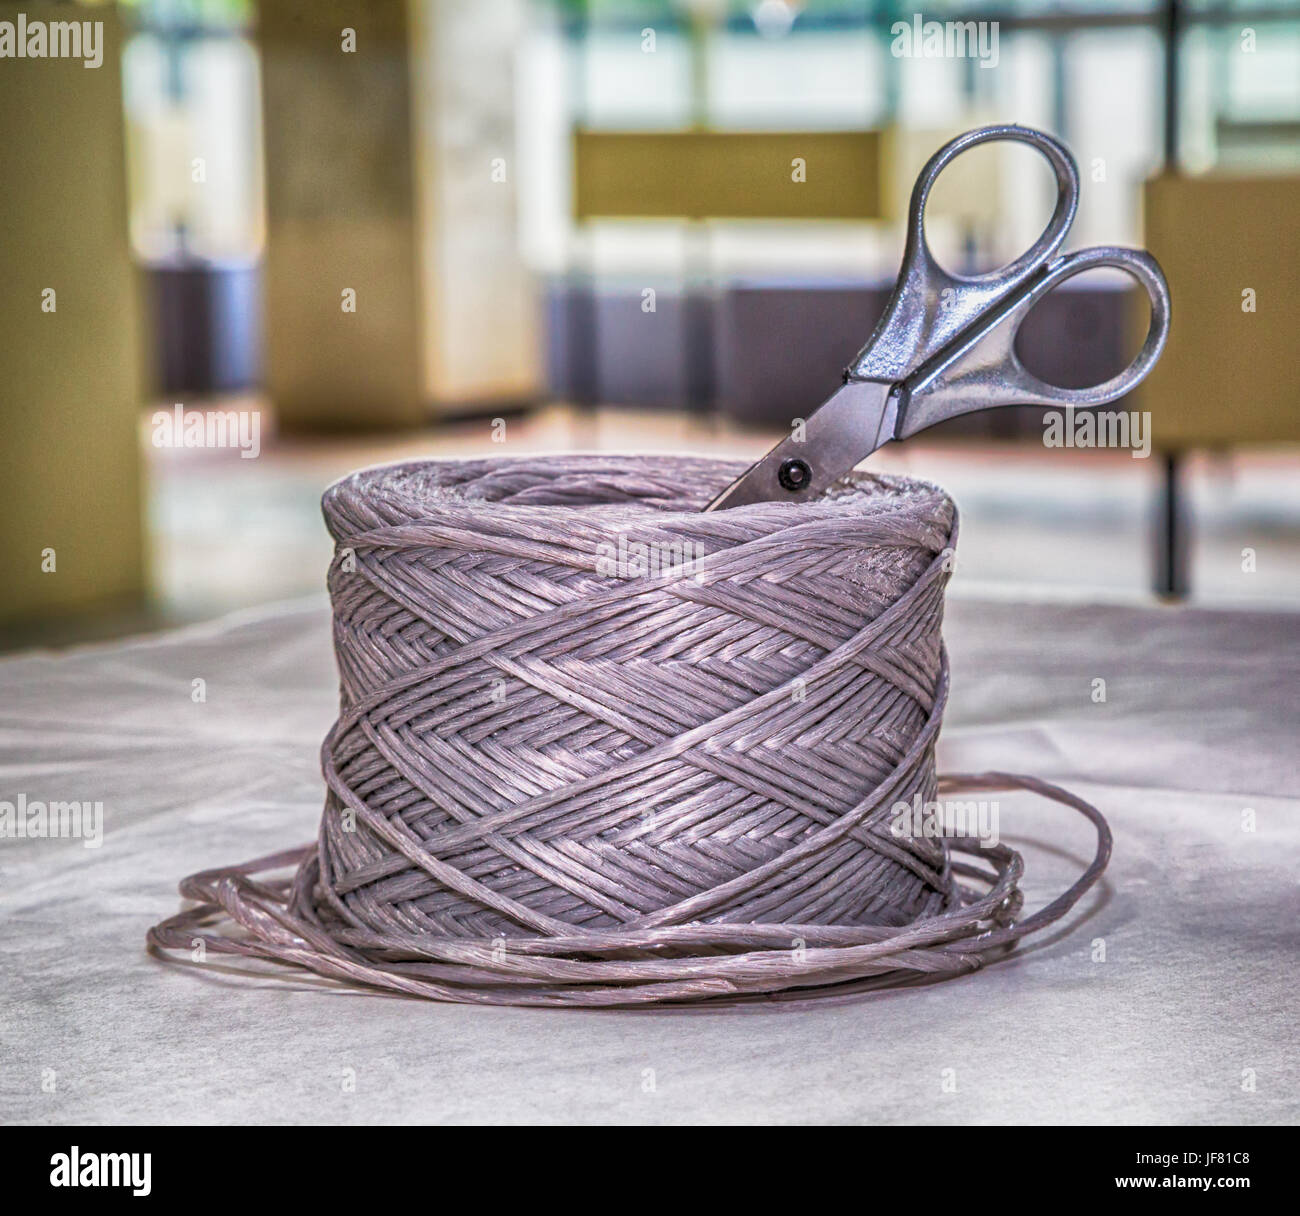 packing rope, scissors Stock Photo - Alamy